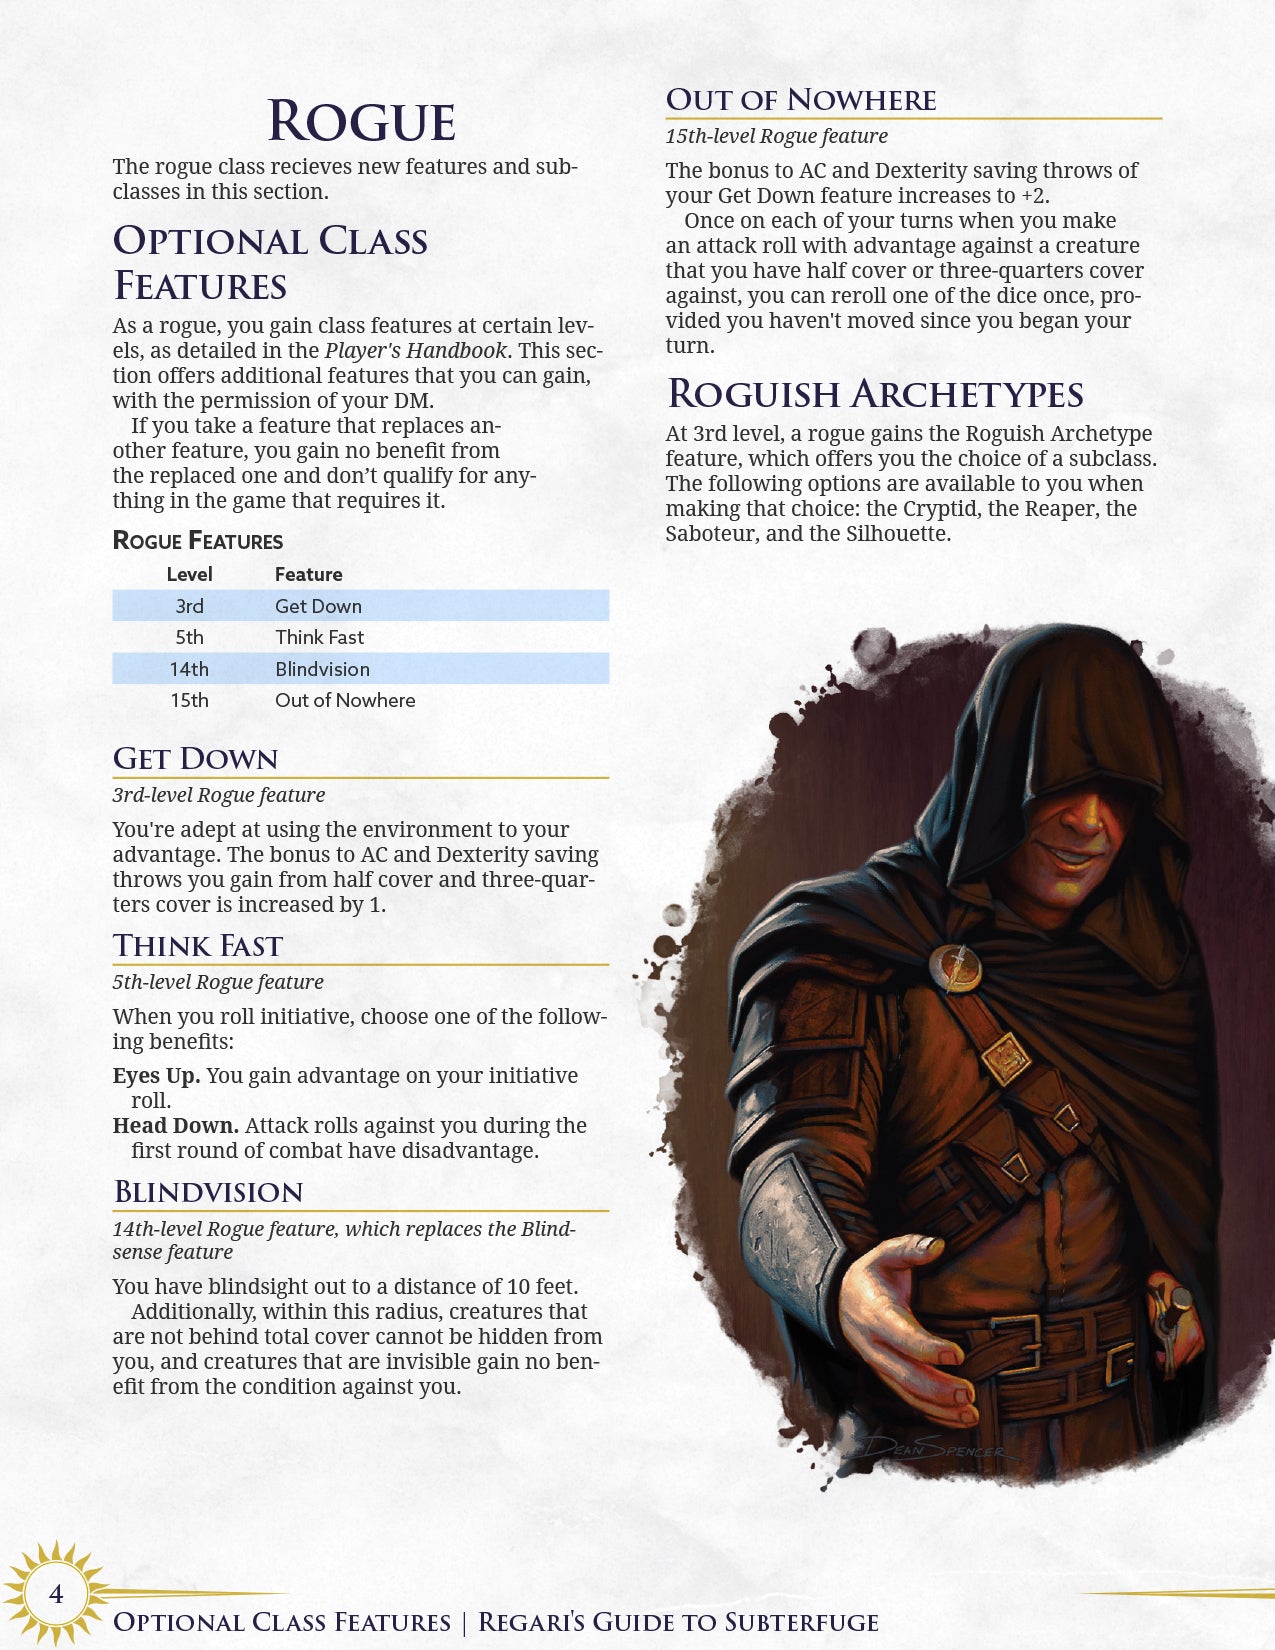 Rogue 5e: DnD 5th Edition Class Guide - RPGBOT